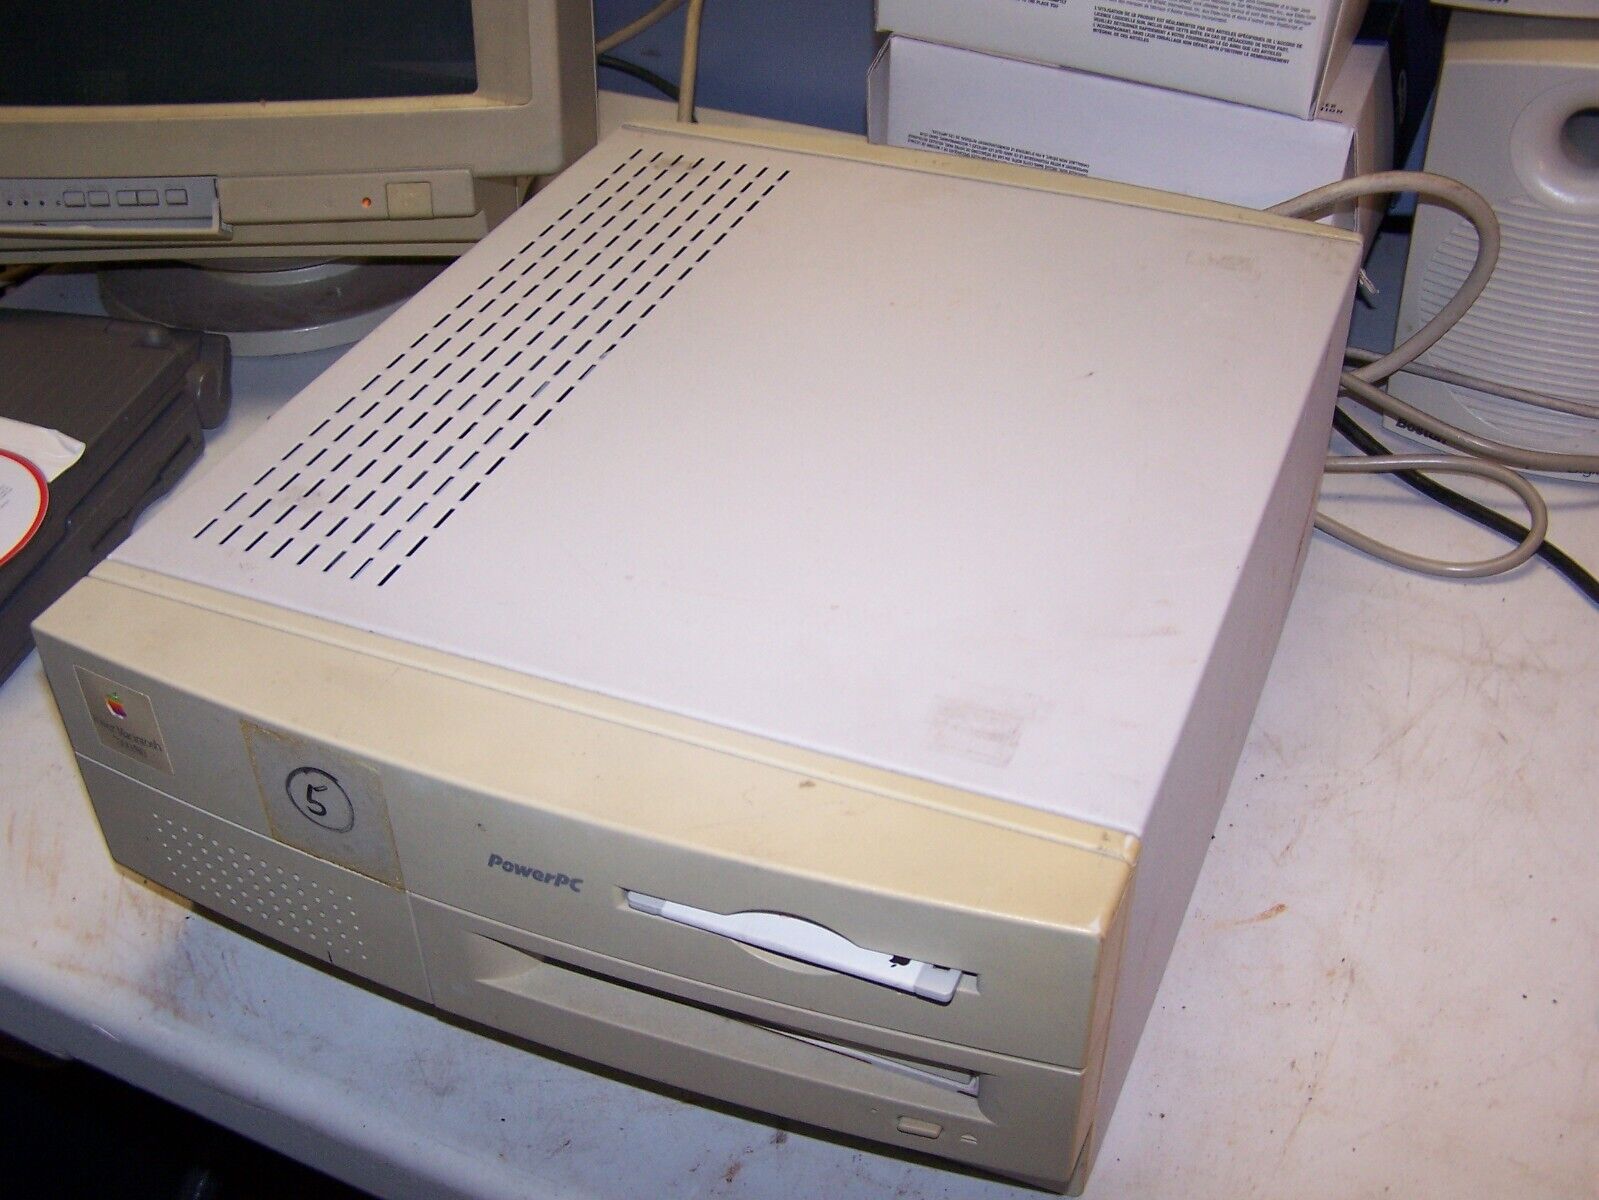 Apple Power Macintosh 7100/80 80MB RAM 700 MB HD OS 8.5.1, CD, Floppy